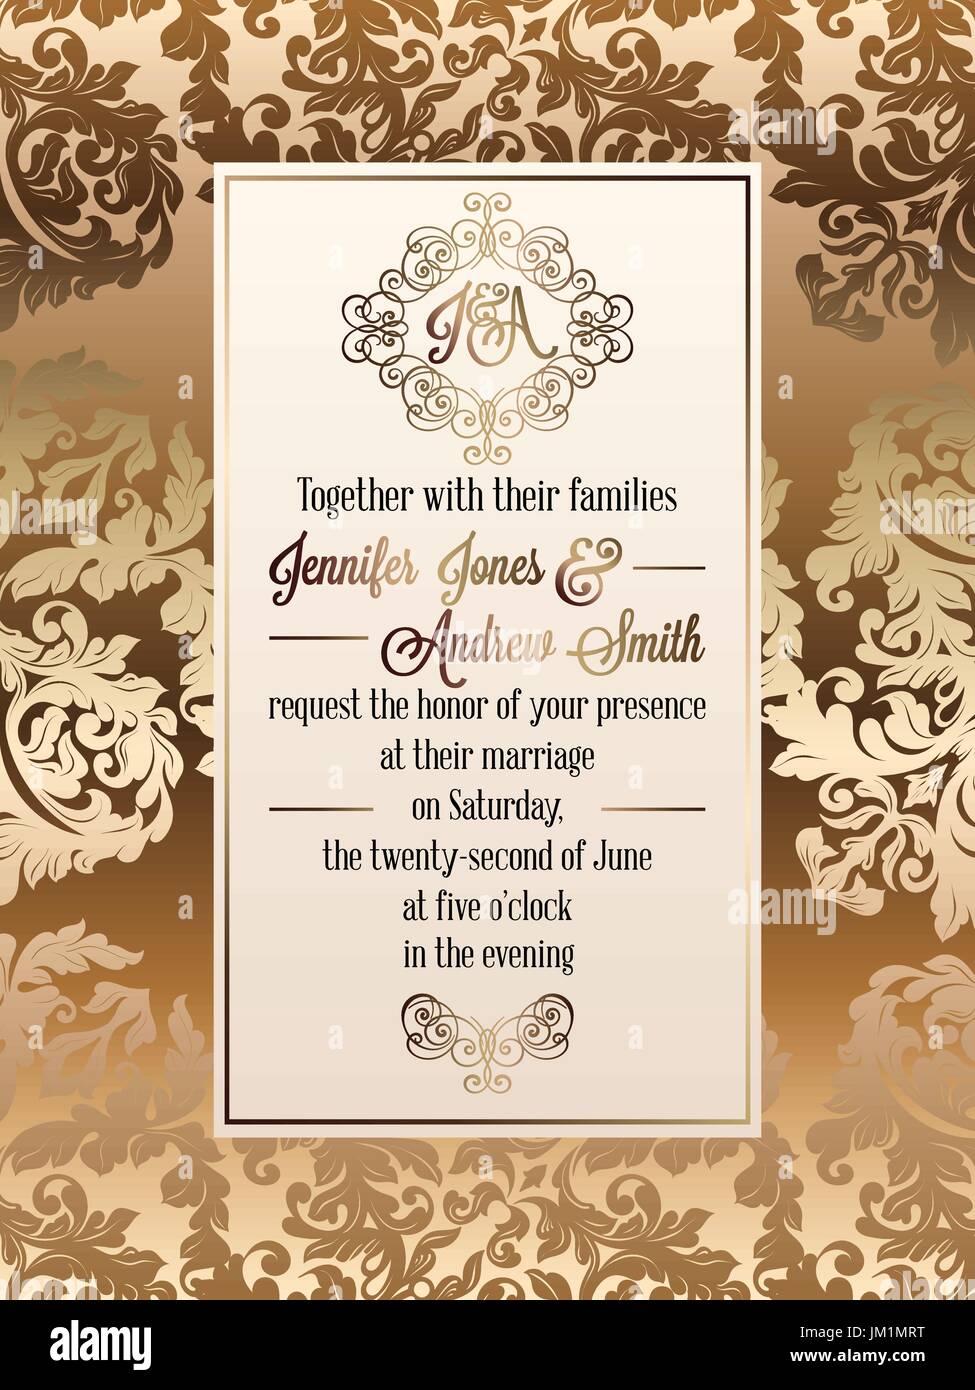 Vintage baroque style wedding invitation card template.. Elegant Within Sample Wedding Invitation Cards Templates